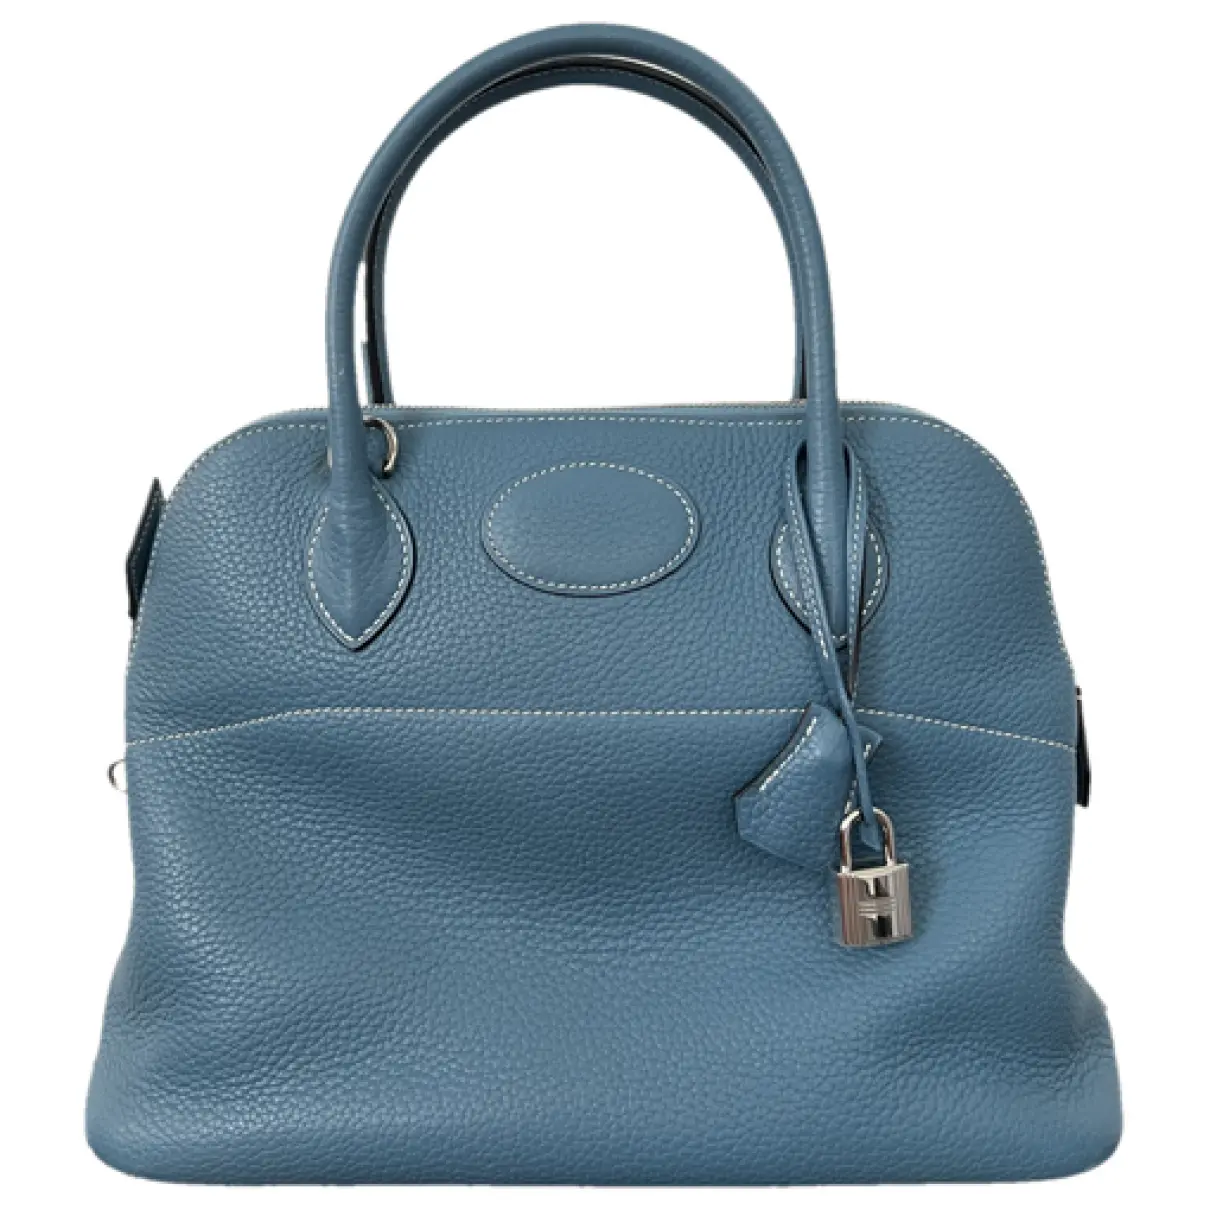 Bolide leather handbag